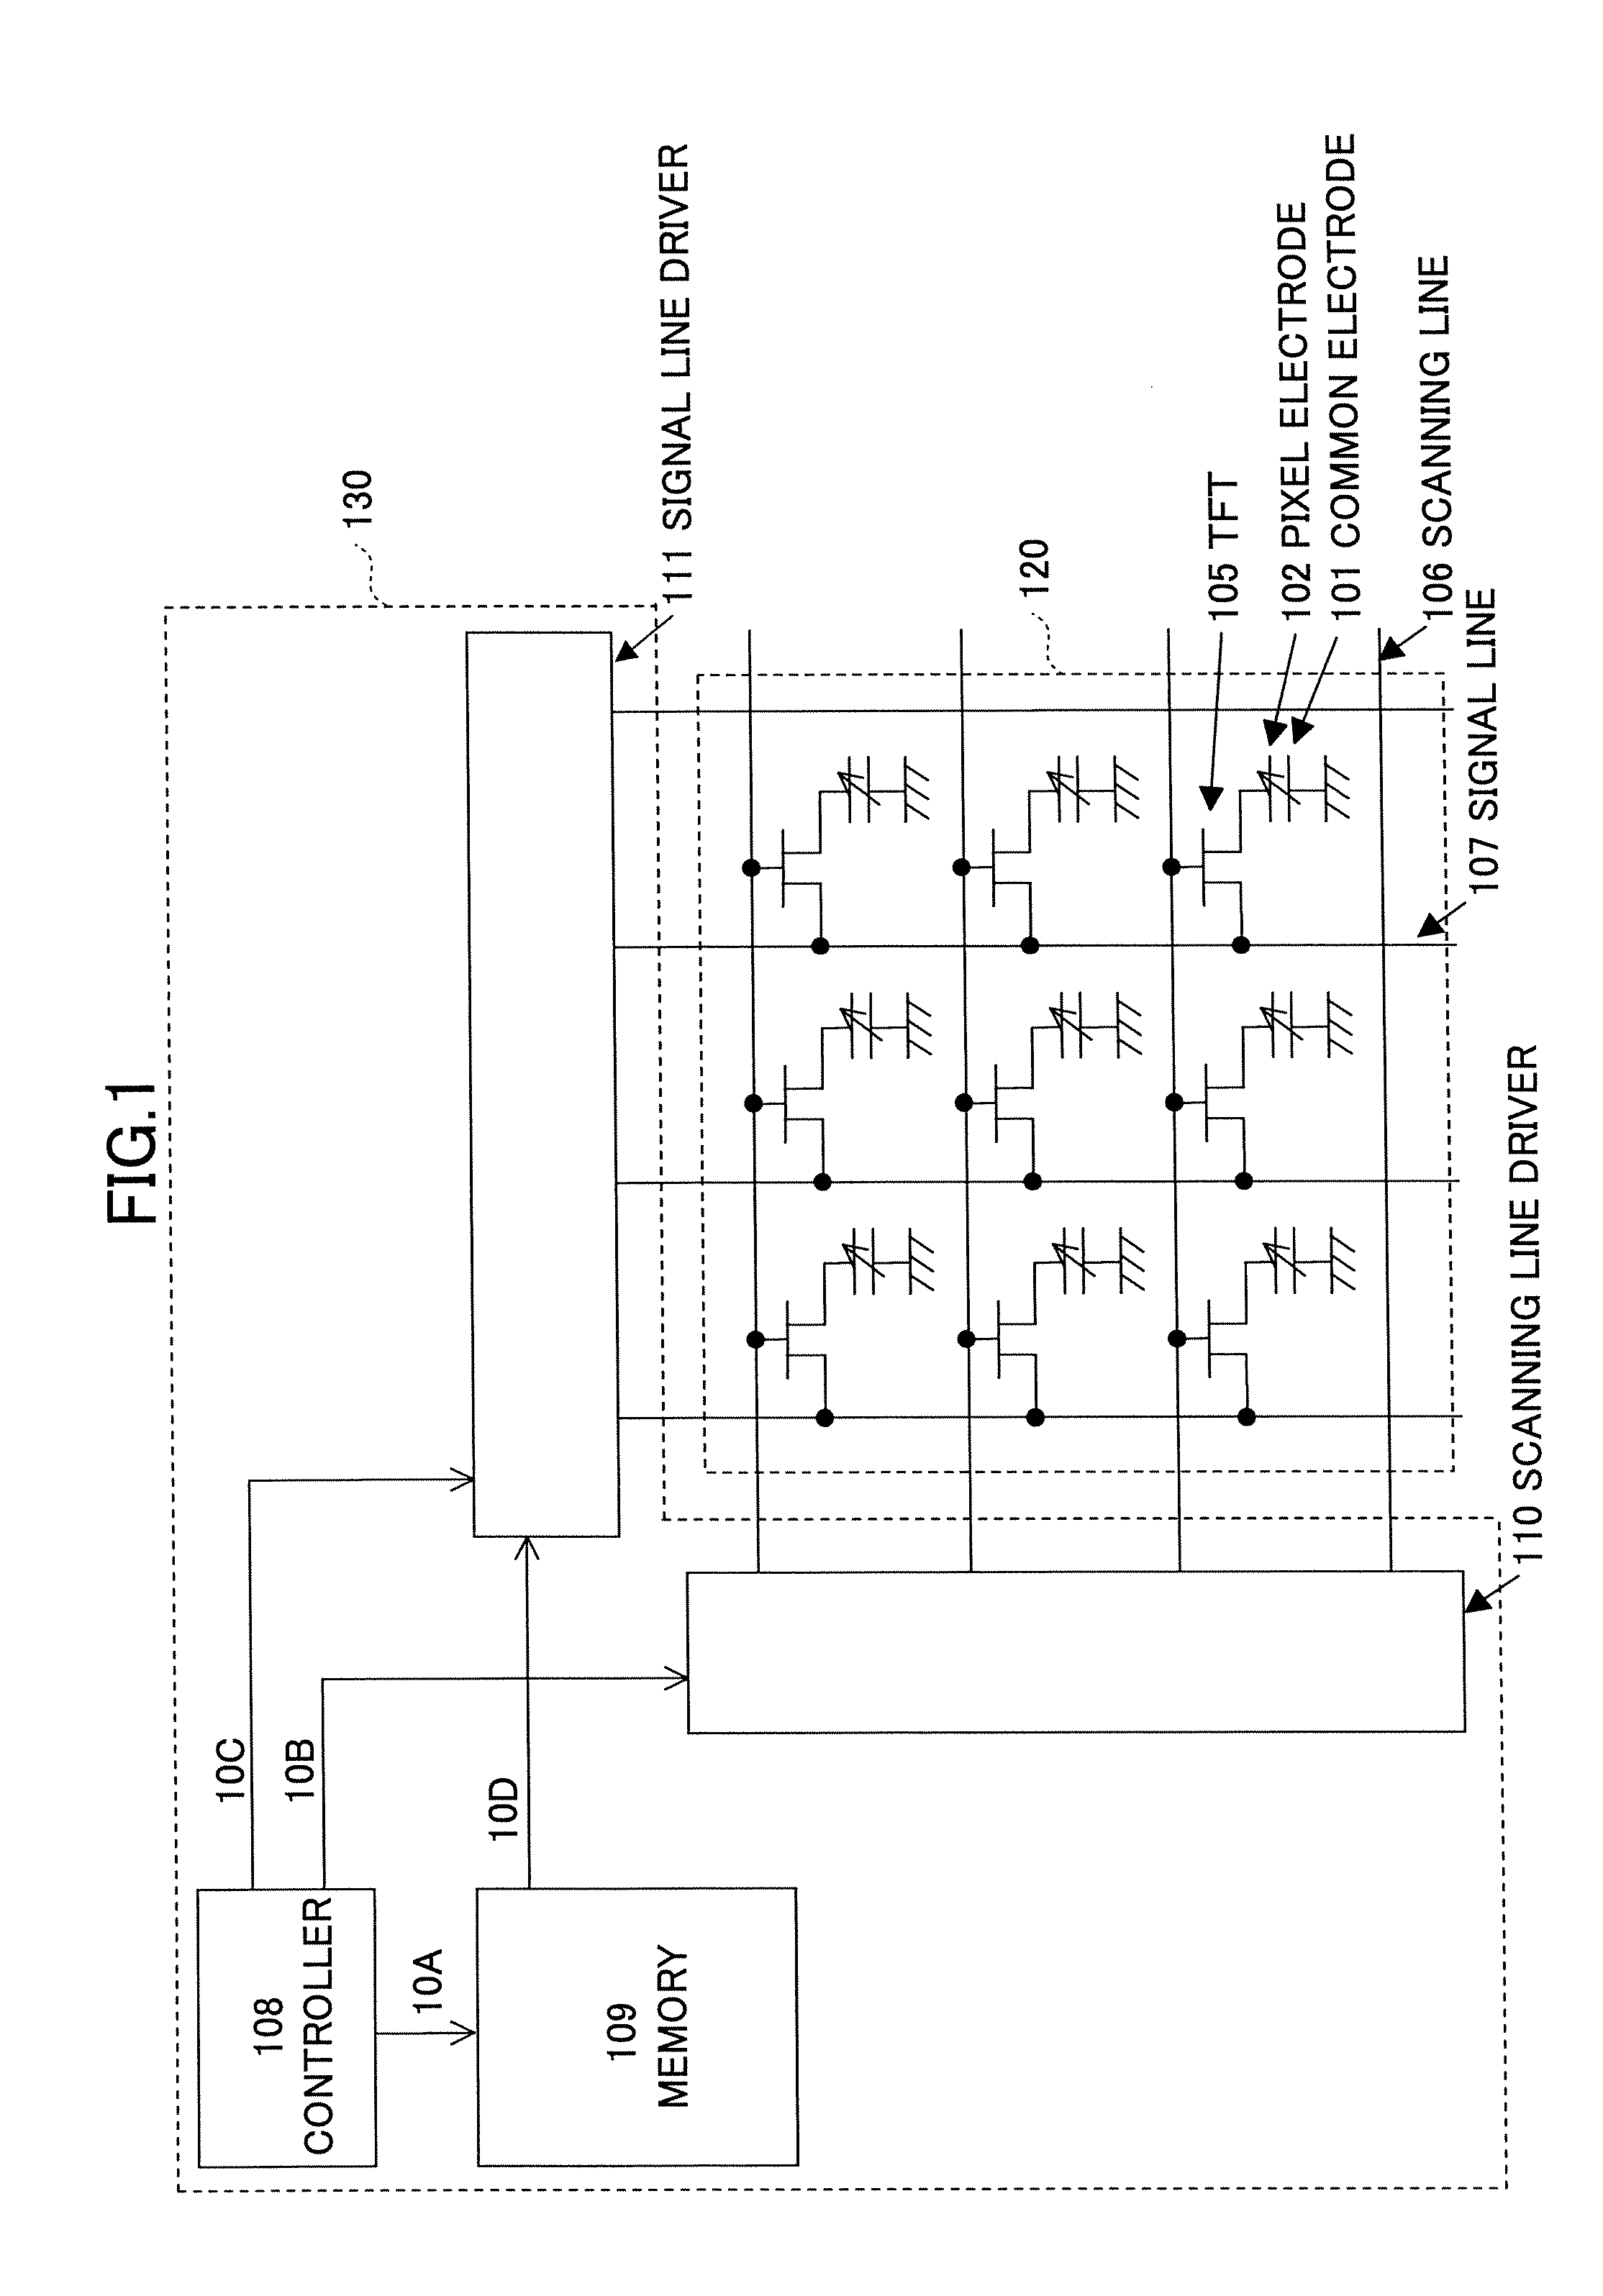 Display apparatus using electrophoretic element